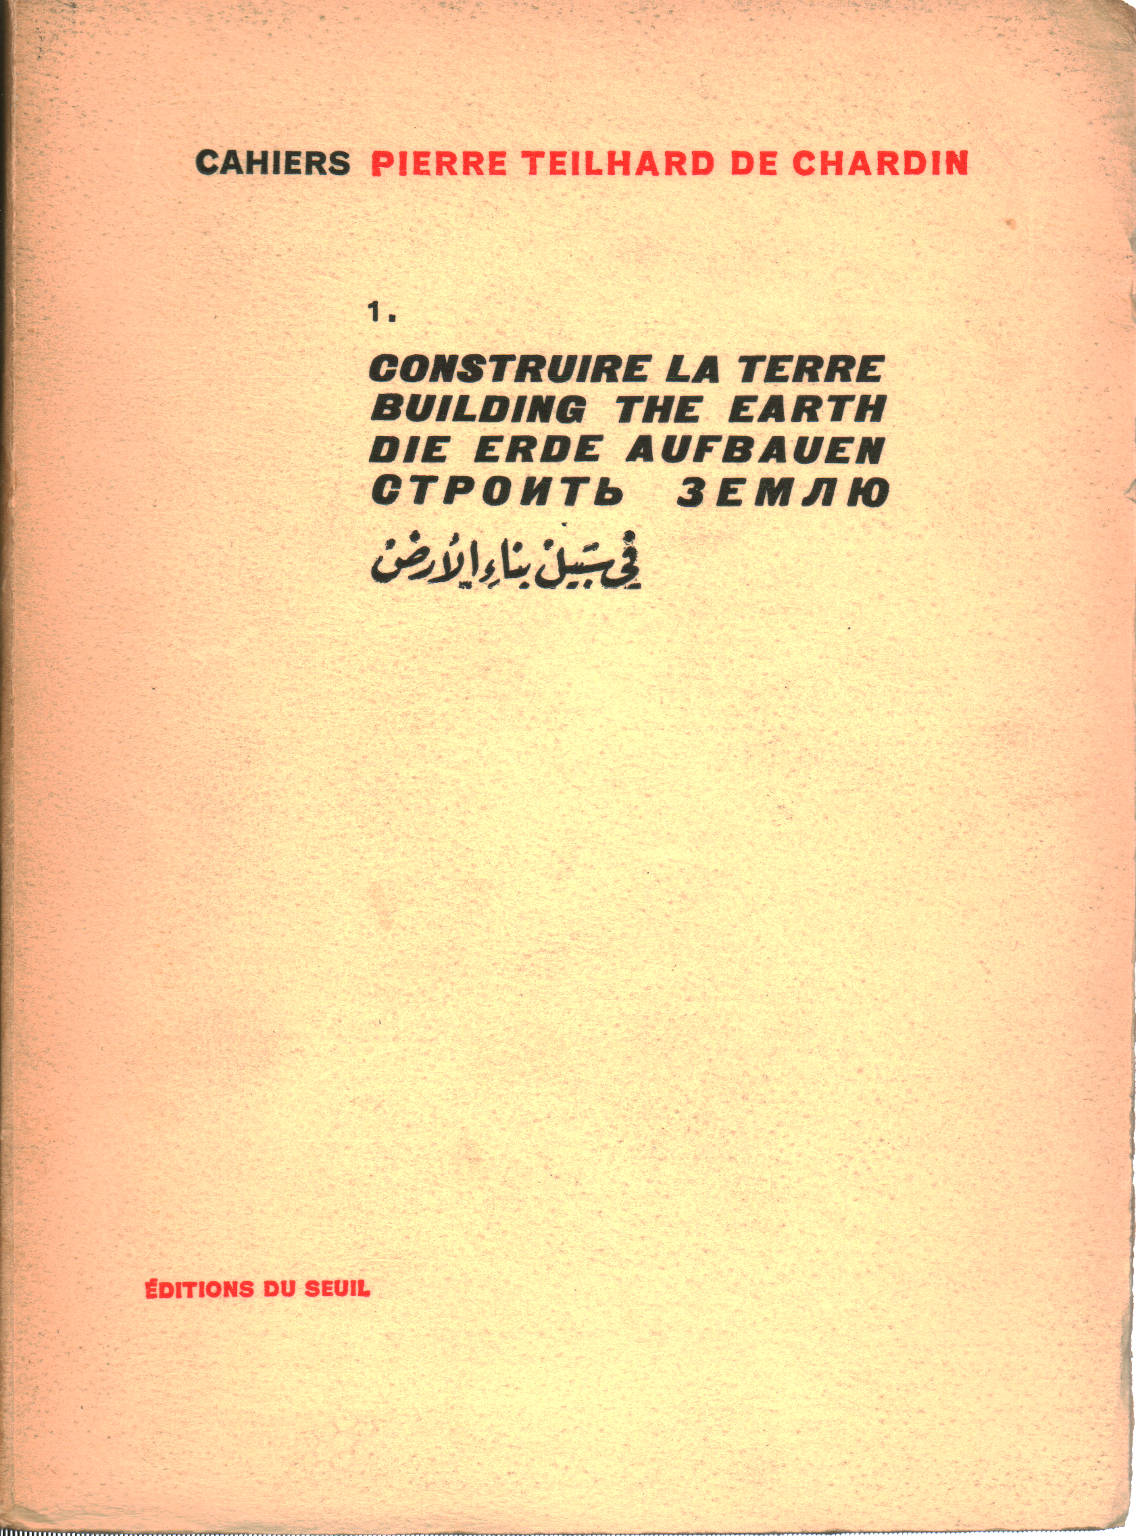 Costruire la terre Volume primo, Pierre Teilhard de Chardin